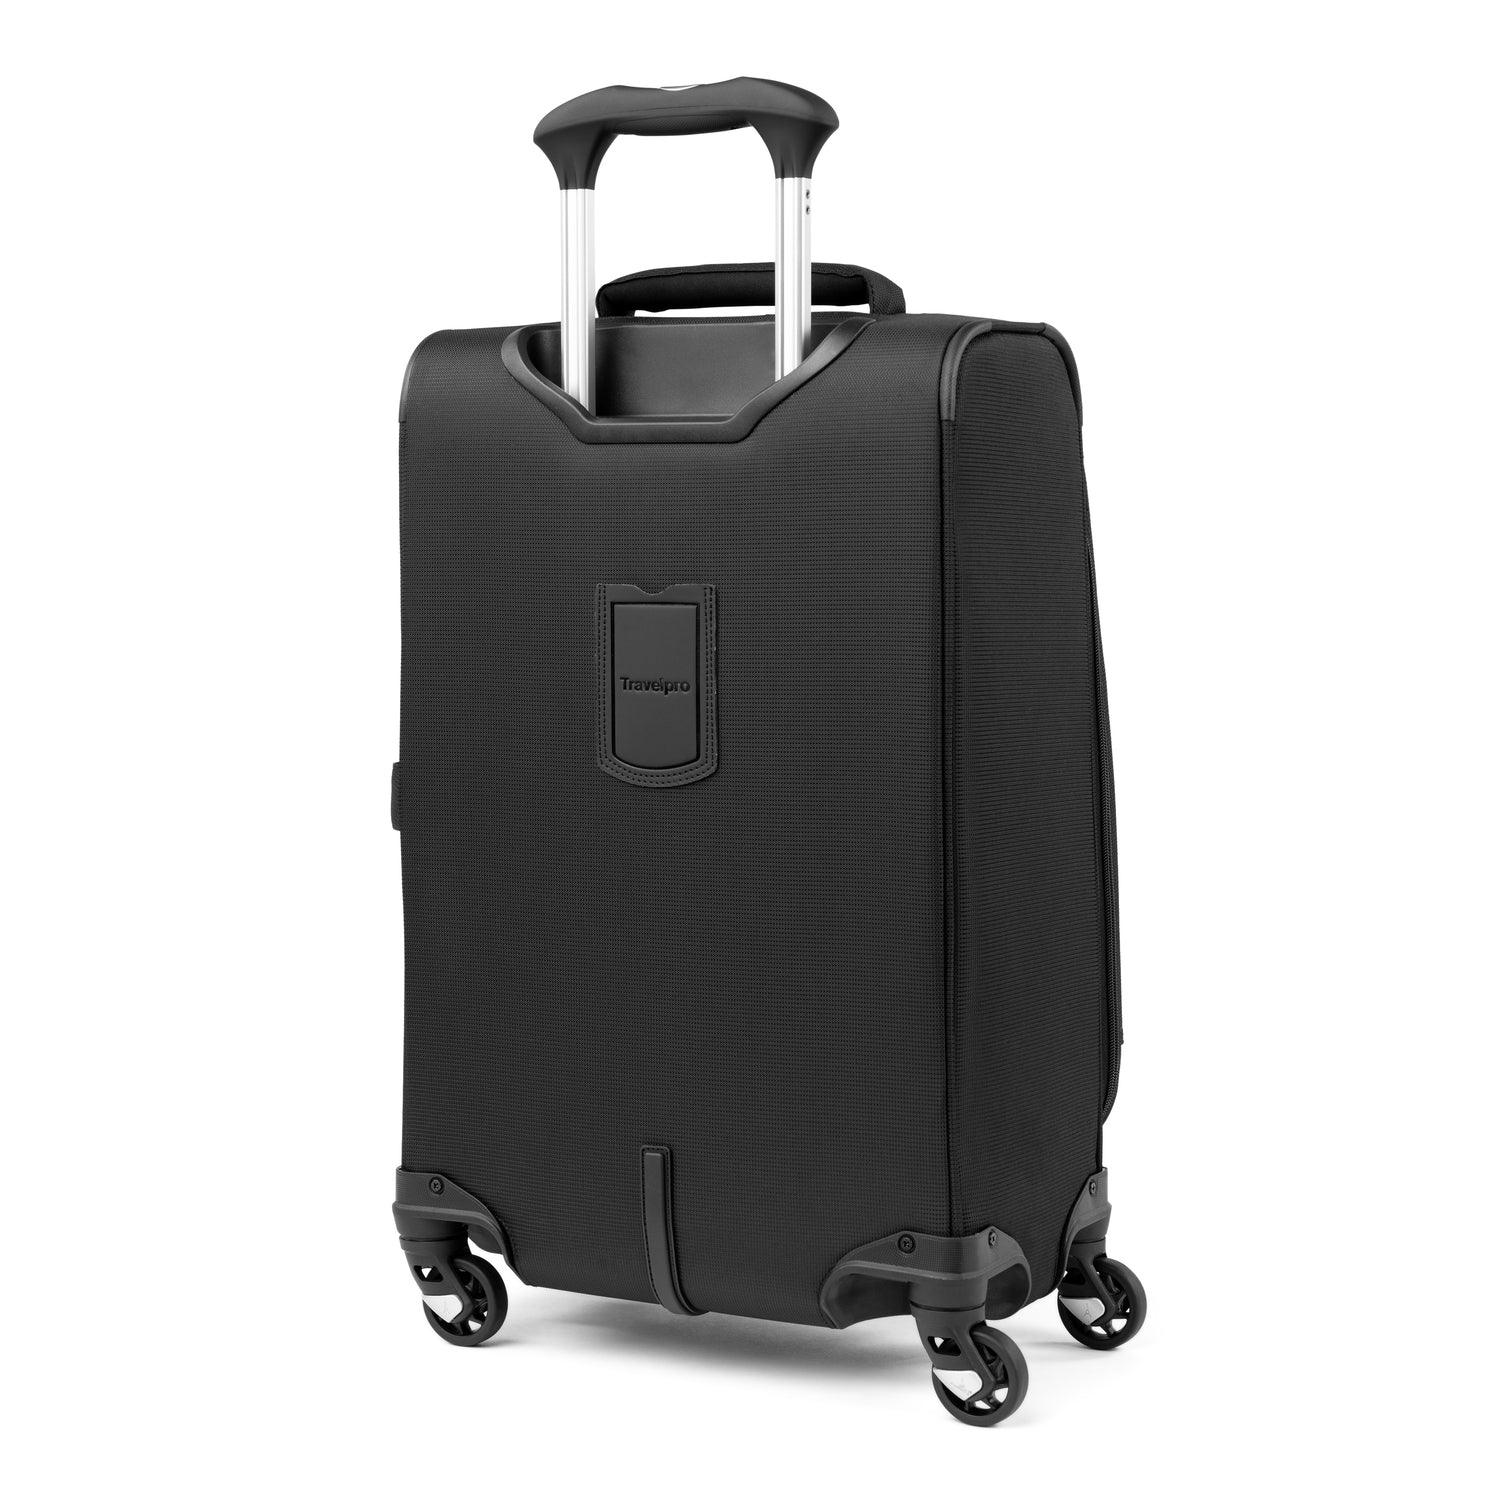 Maxlite 5 21" / 29" Luggage Set